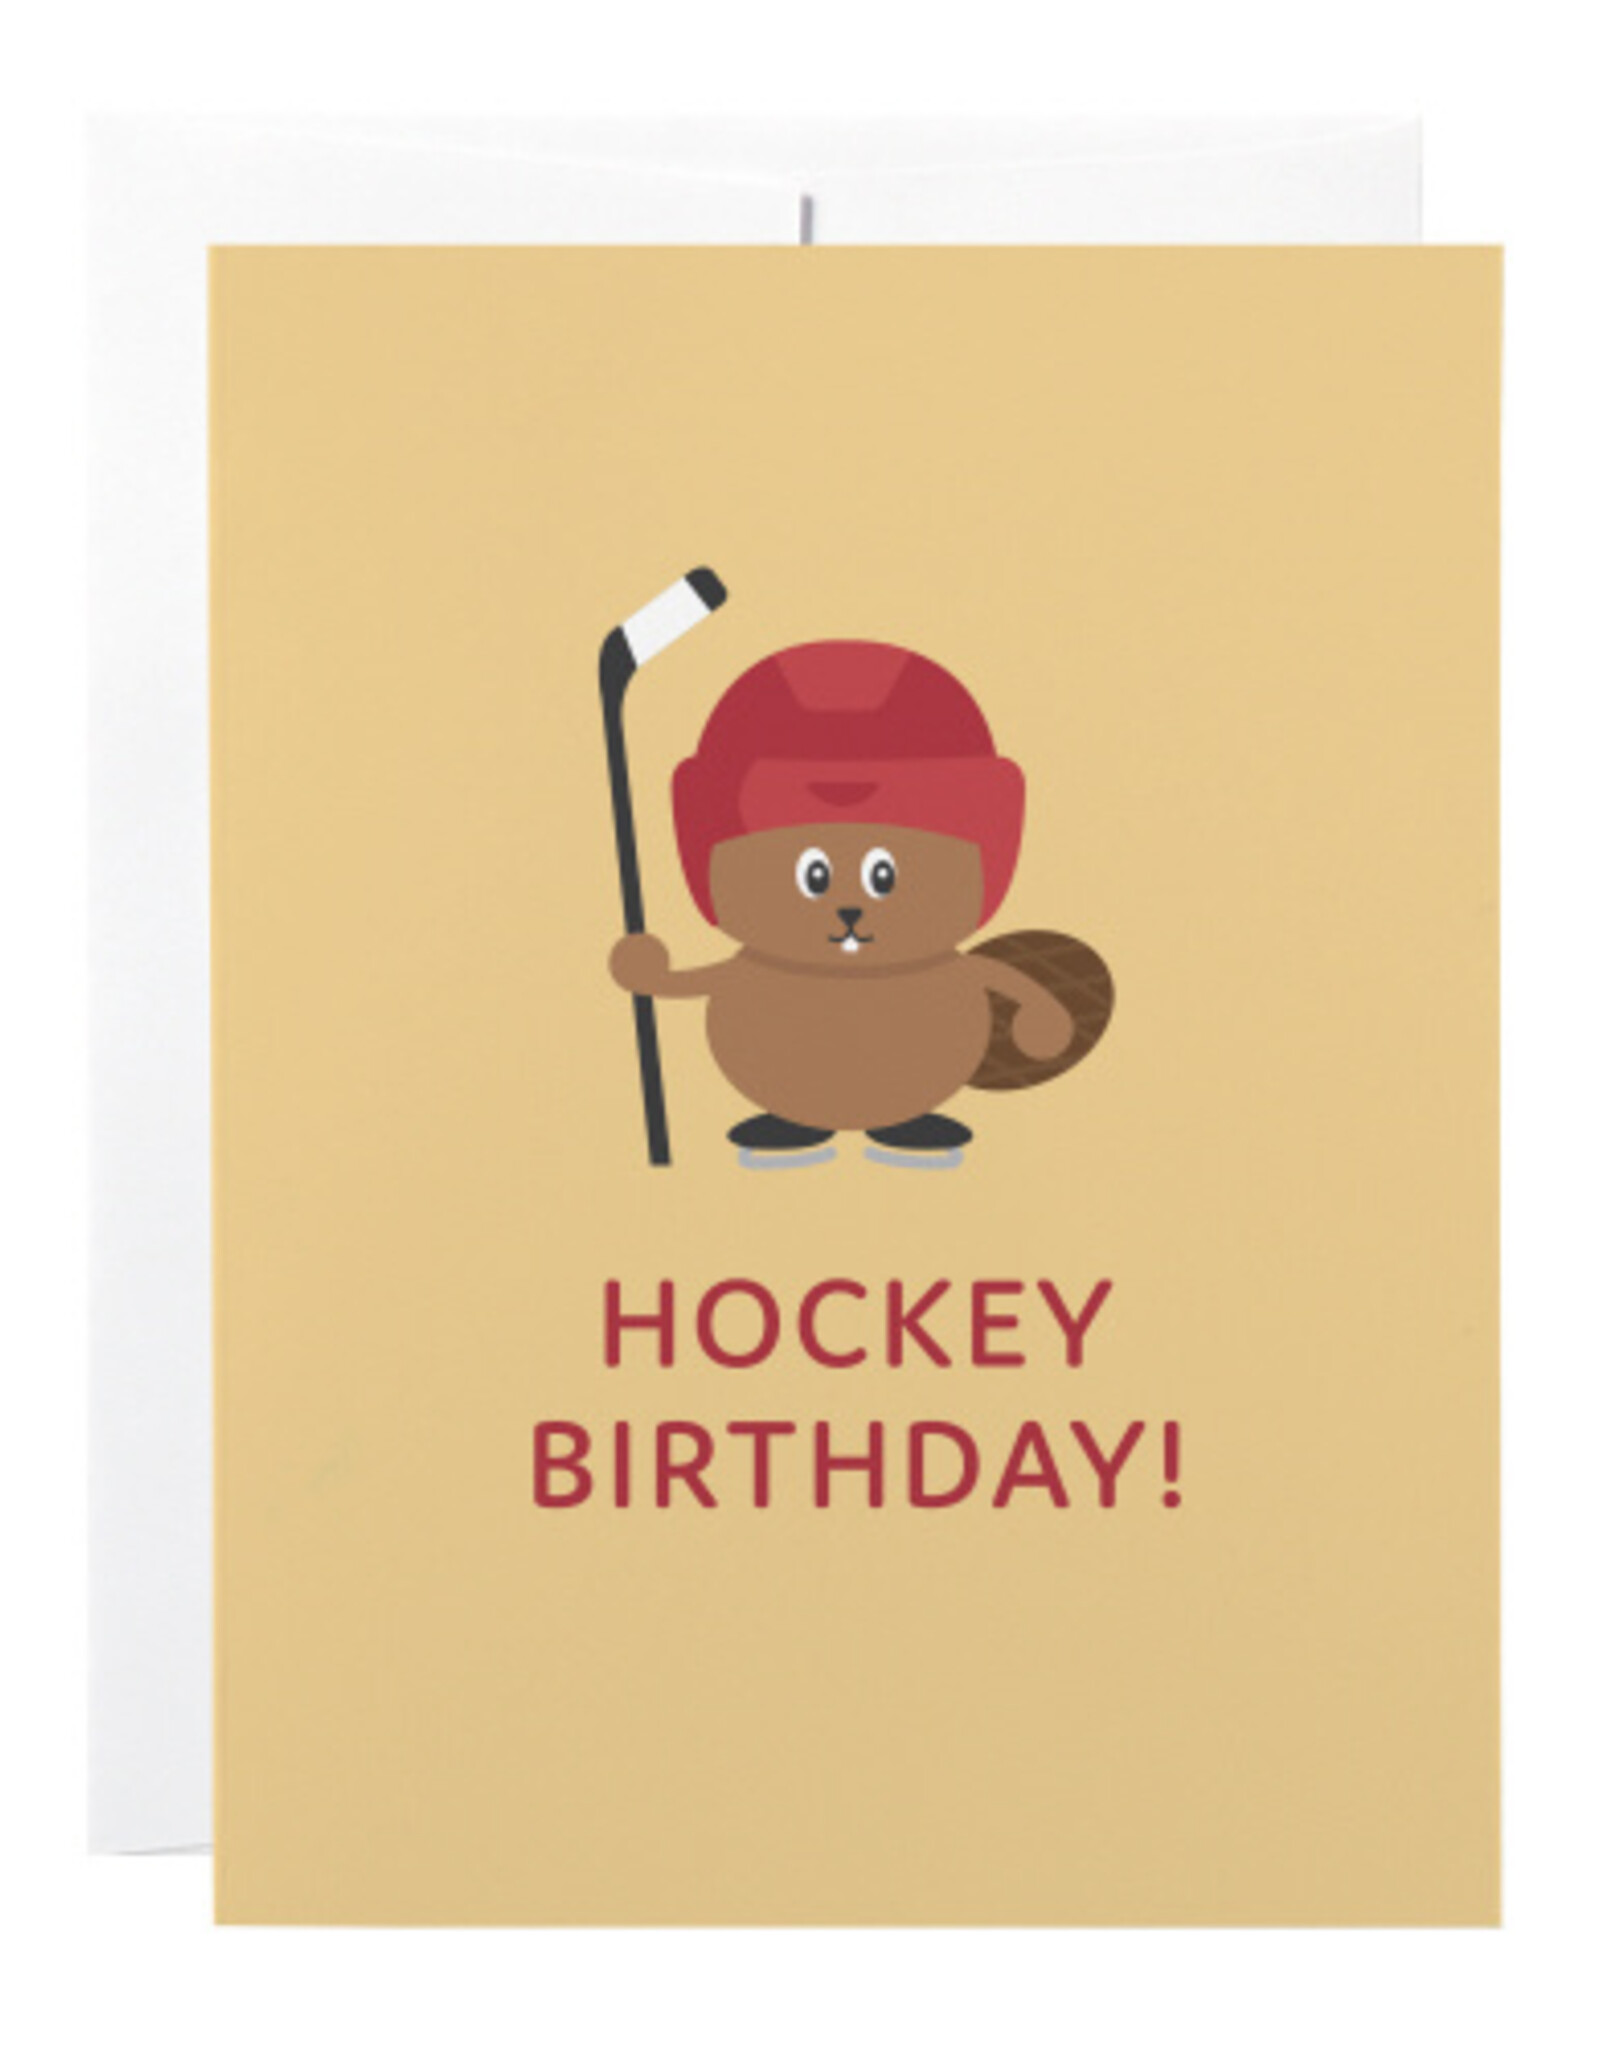 Classy Cards Creative Card, Hockey Birthday